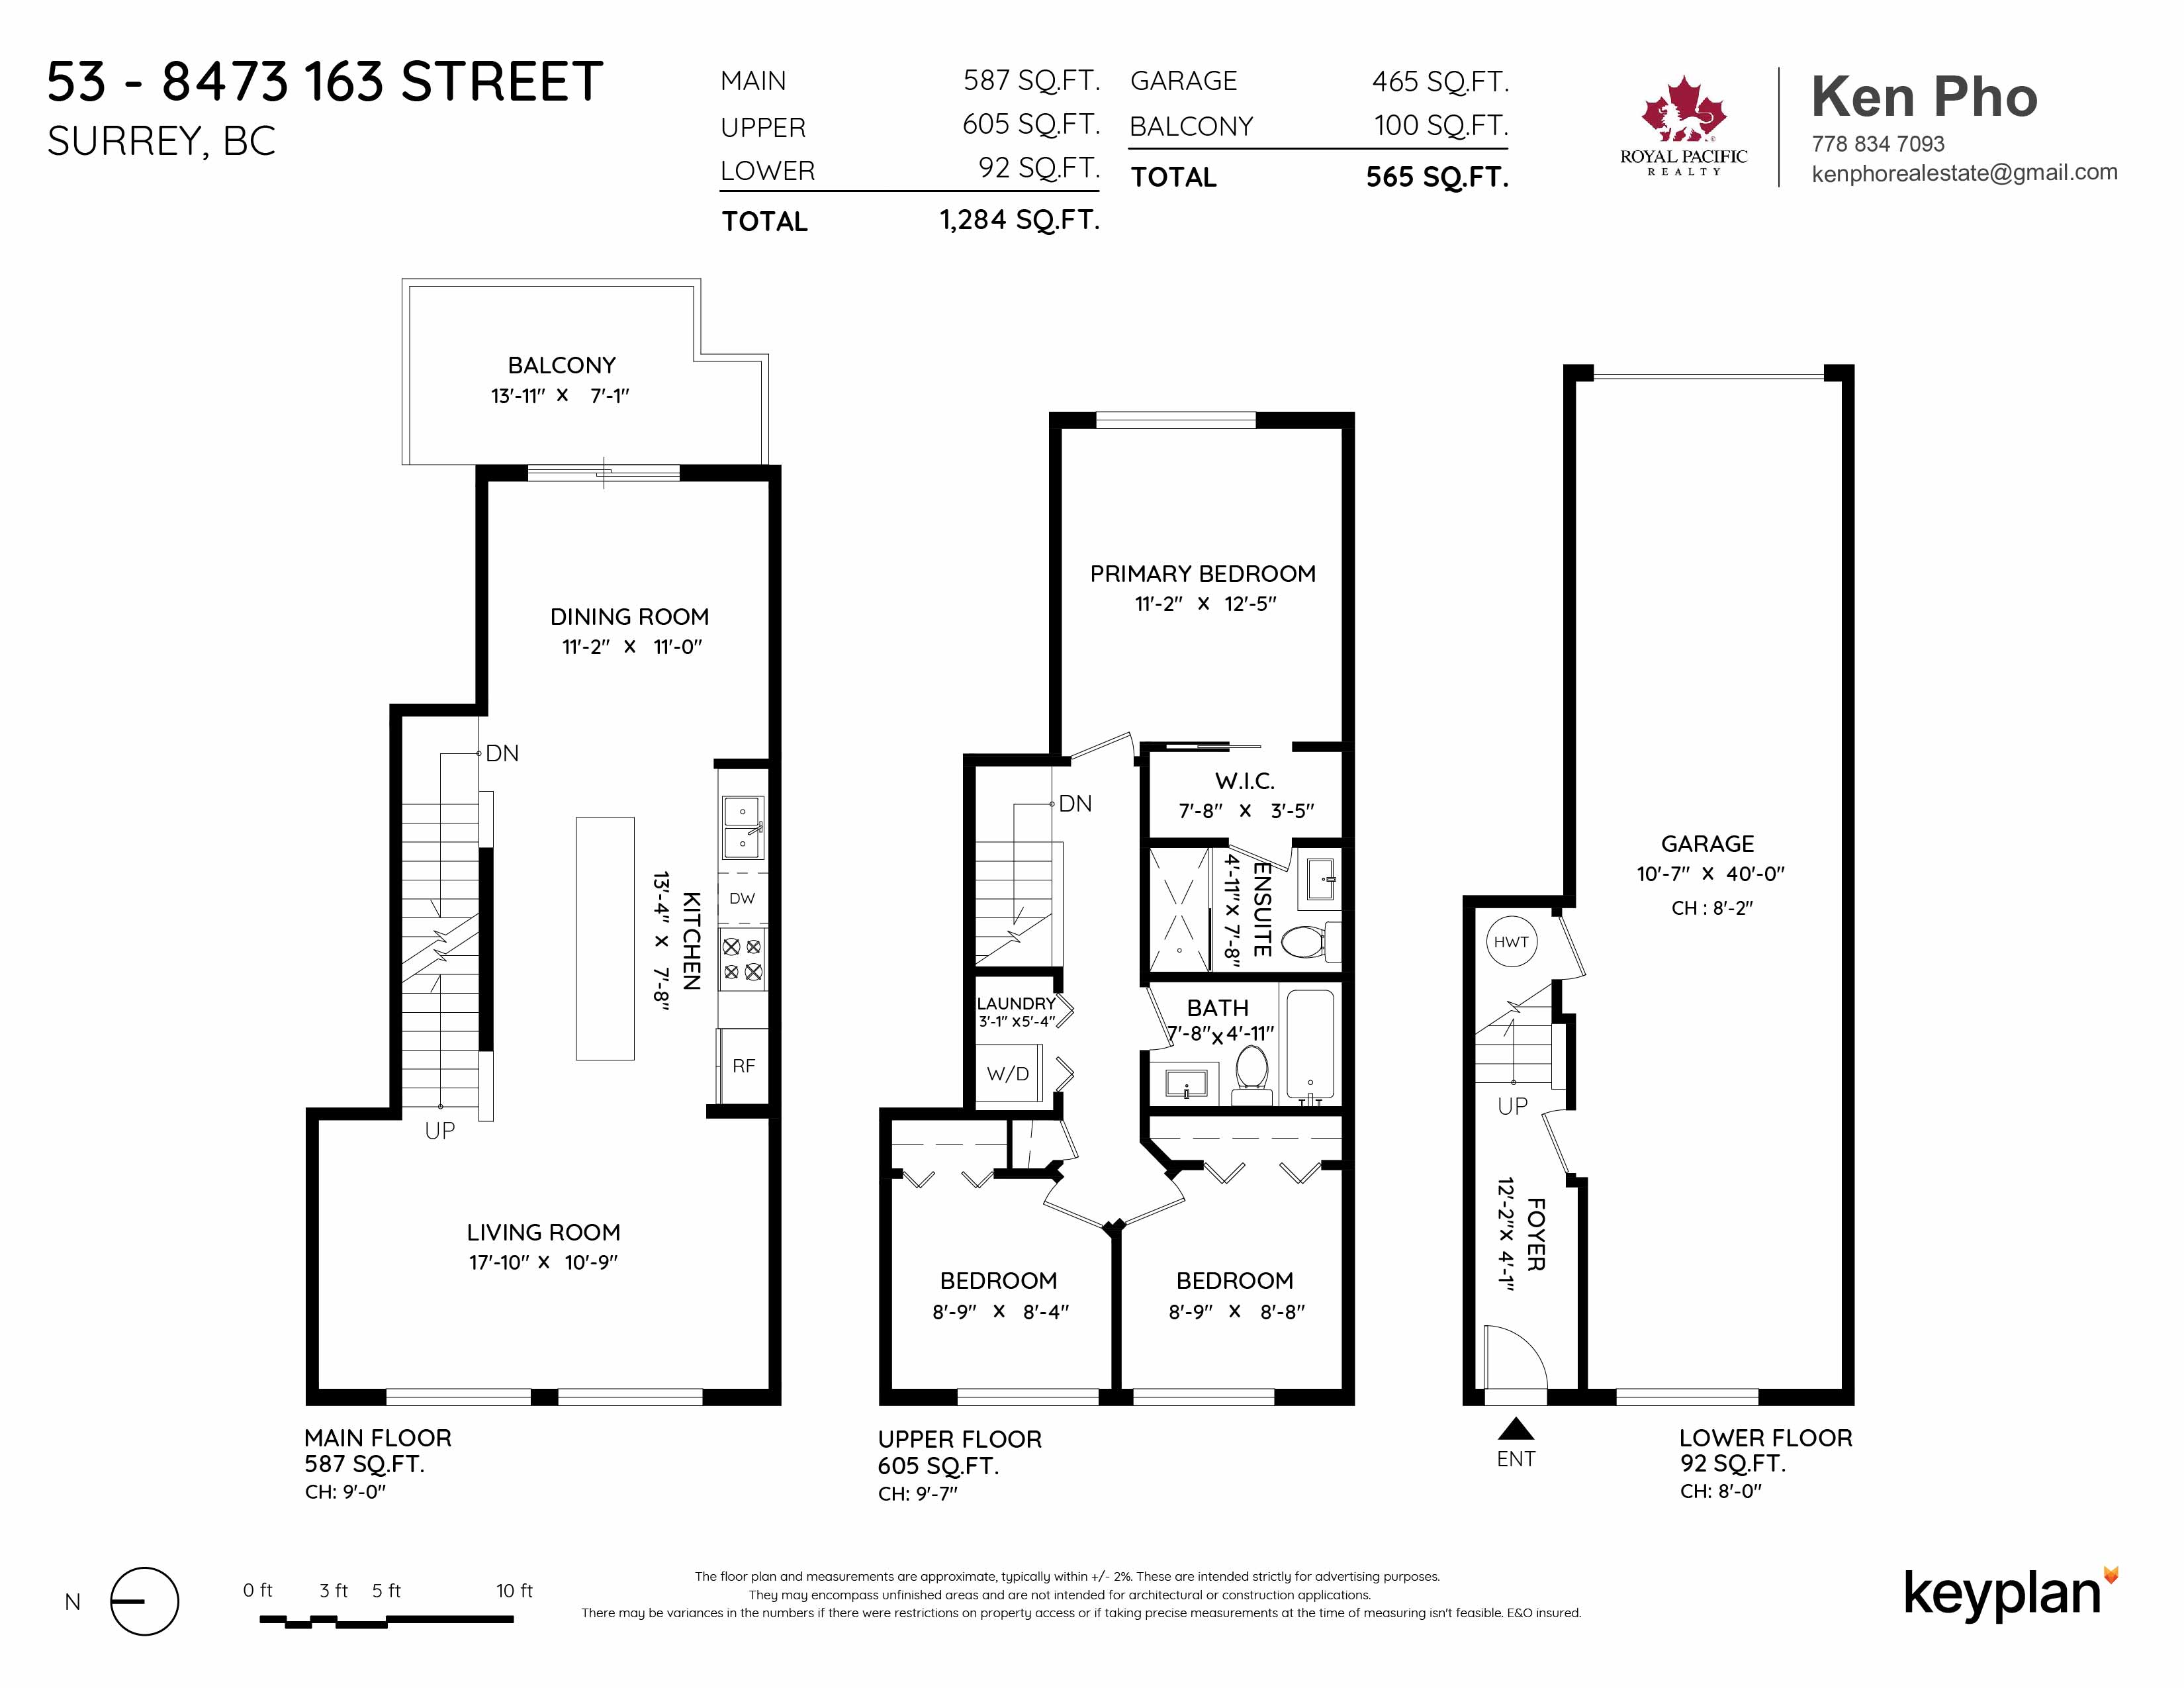 Ken Pho - Unit 53 - 8473 163 Street, Surrey, BC, Canada | Floor Plan 1